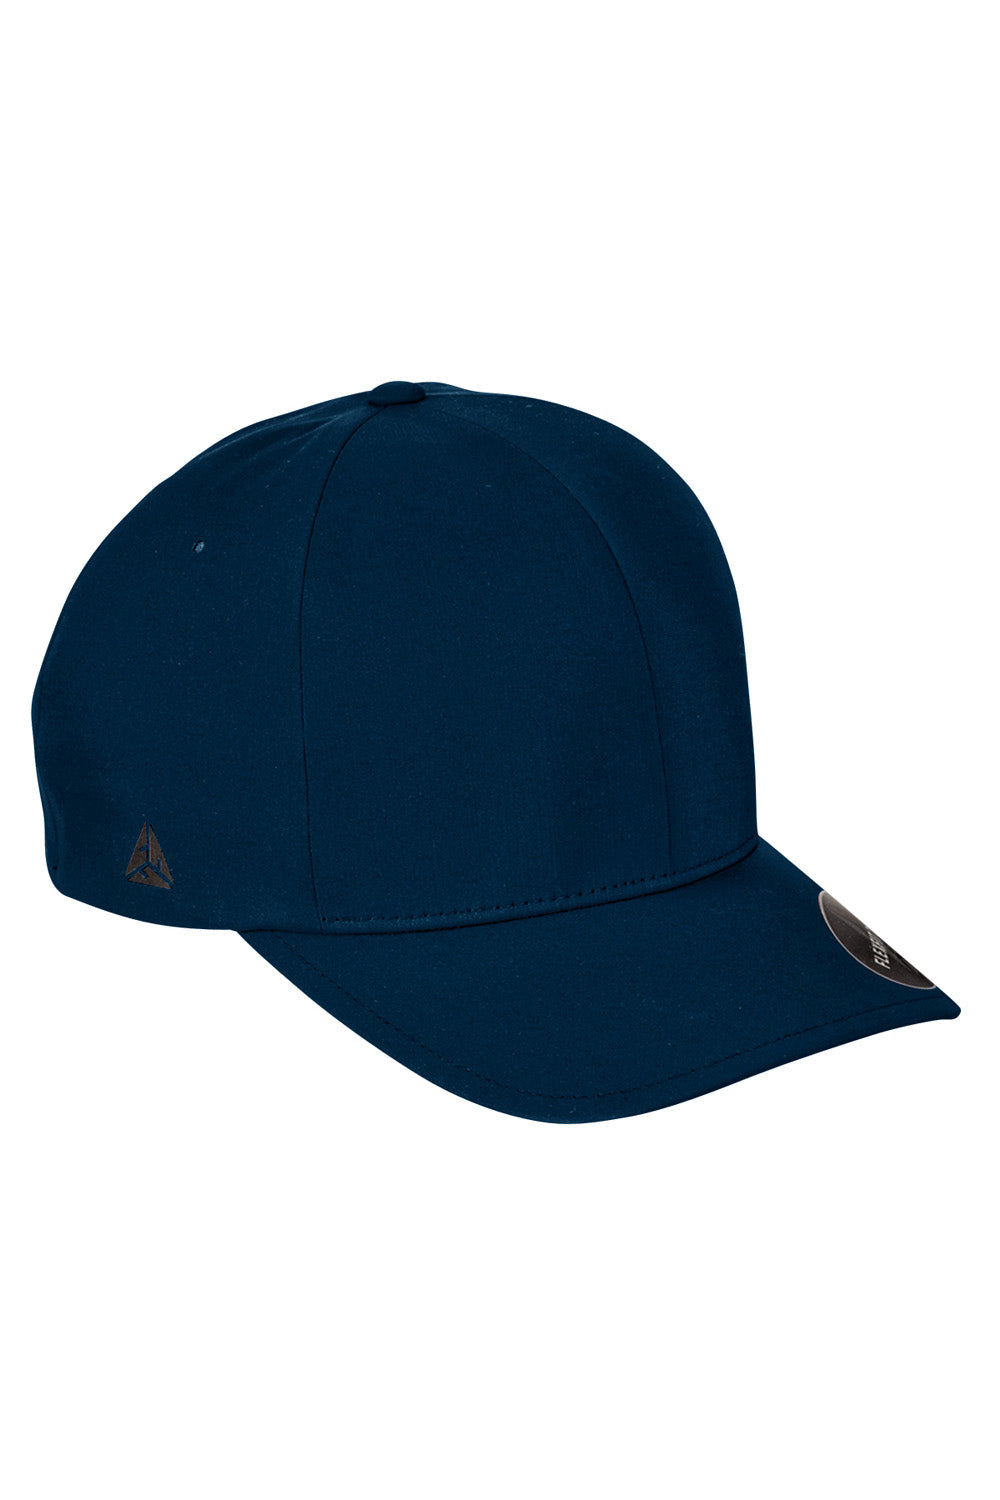 Flexfit YP180 Mens Moisture Wicking Stretch Fit Hat Navy Blue Front